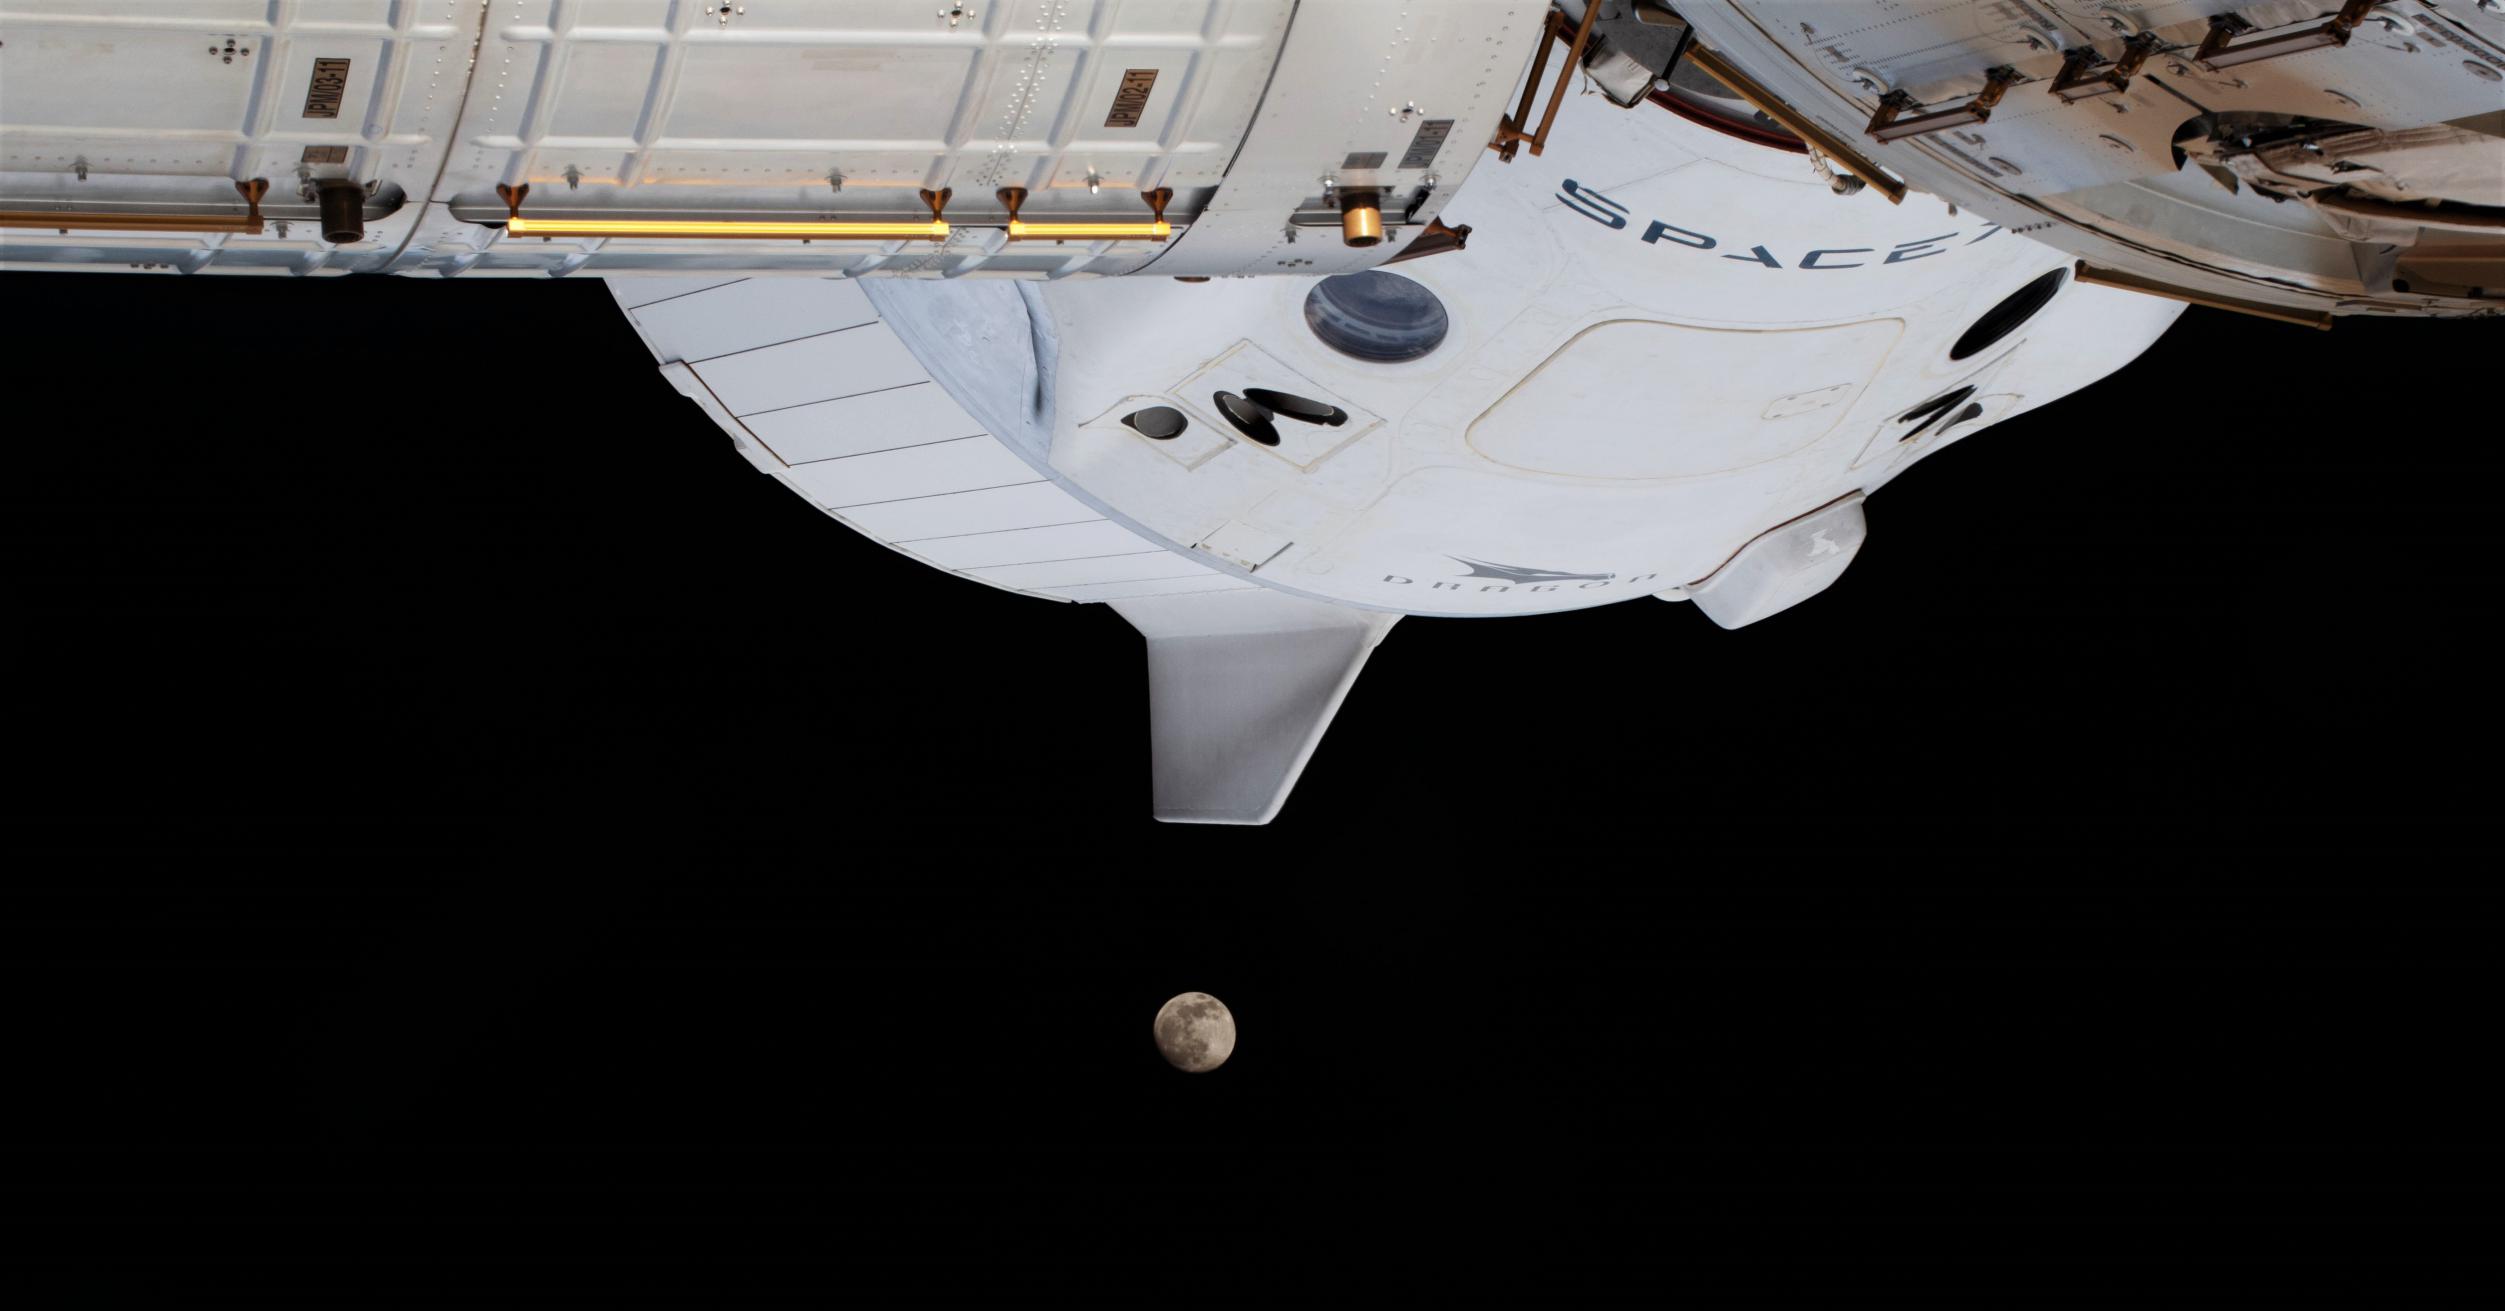 Crew Dragon C207 Crew-1 ISS 012621 (NASA) Moon eclipse 5 crop 2 (c)